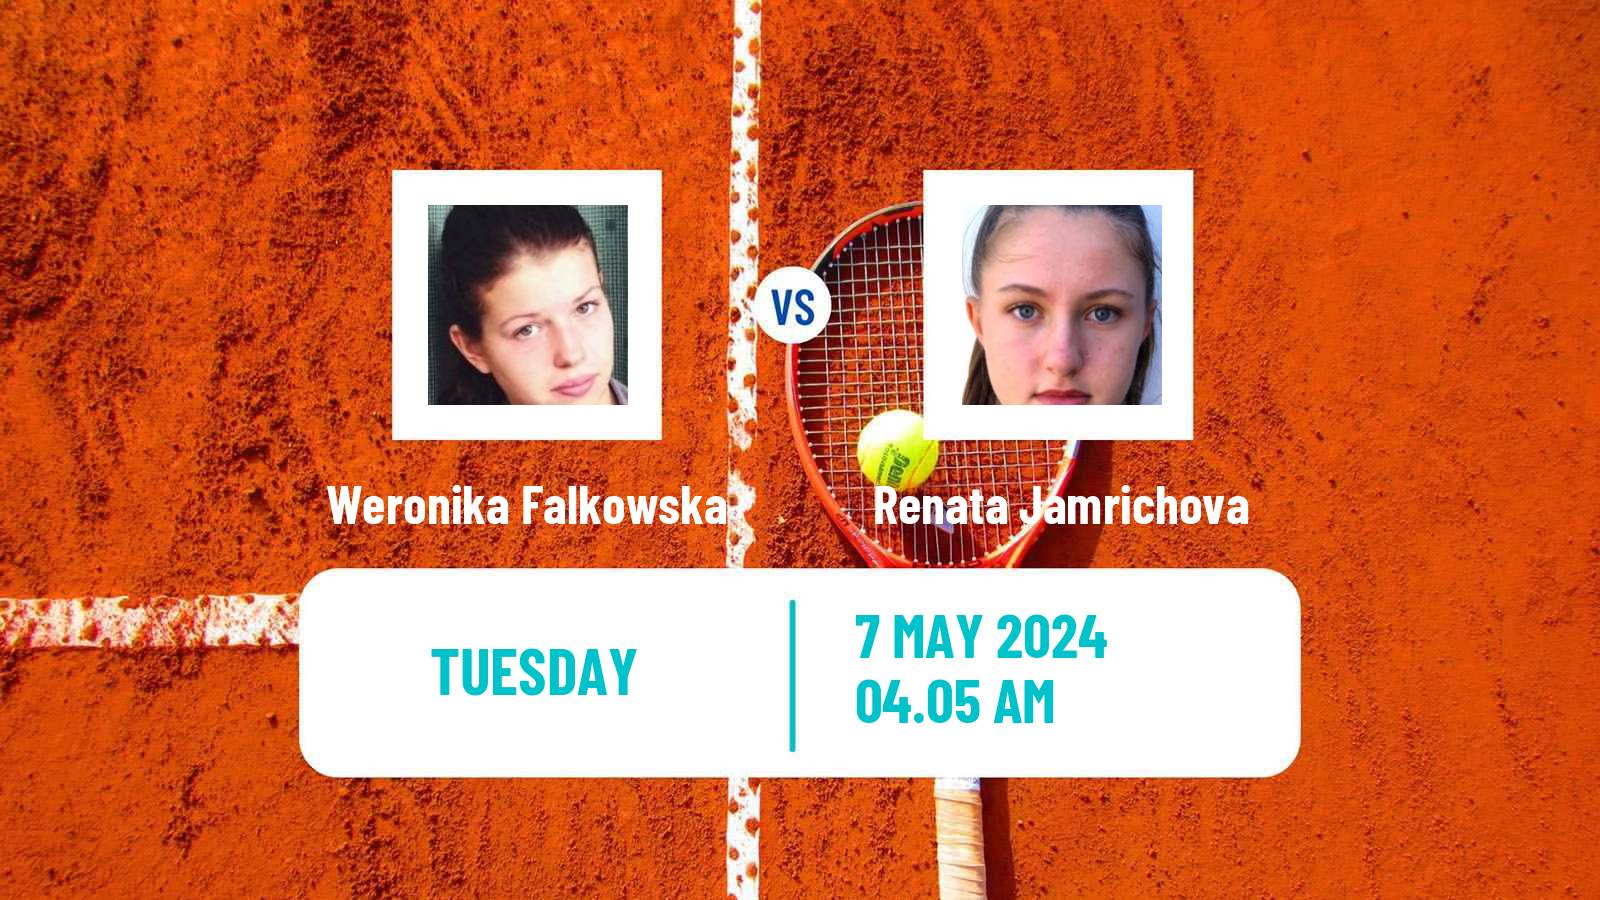 Tennis ITF W75 Trnava 2 Women Weronika Falkowska - Renata Jamrichova